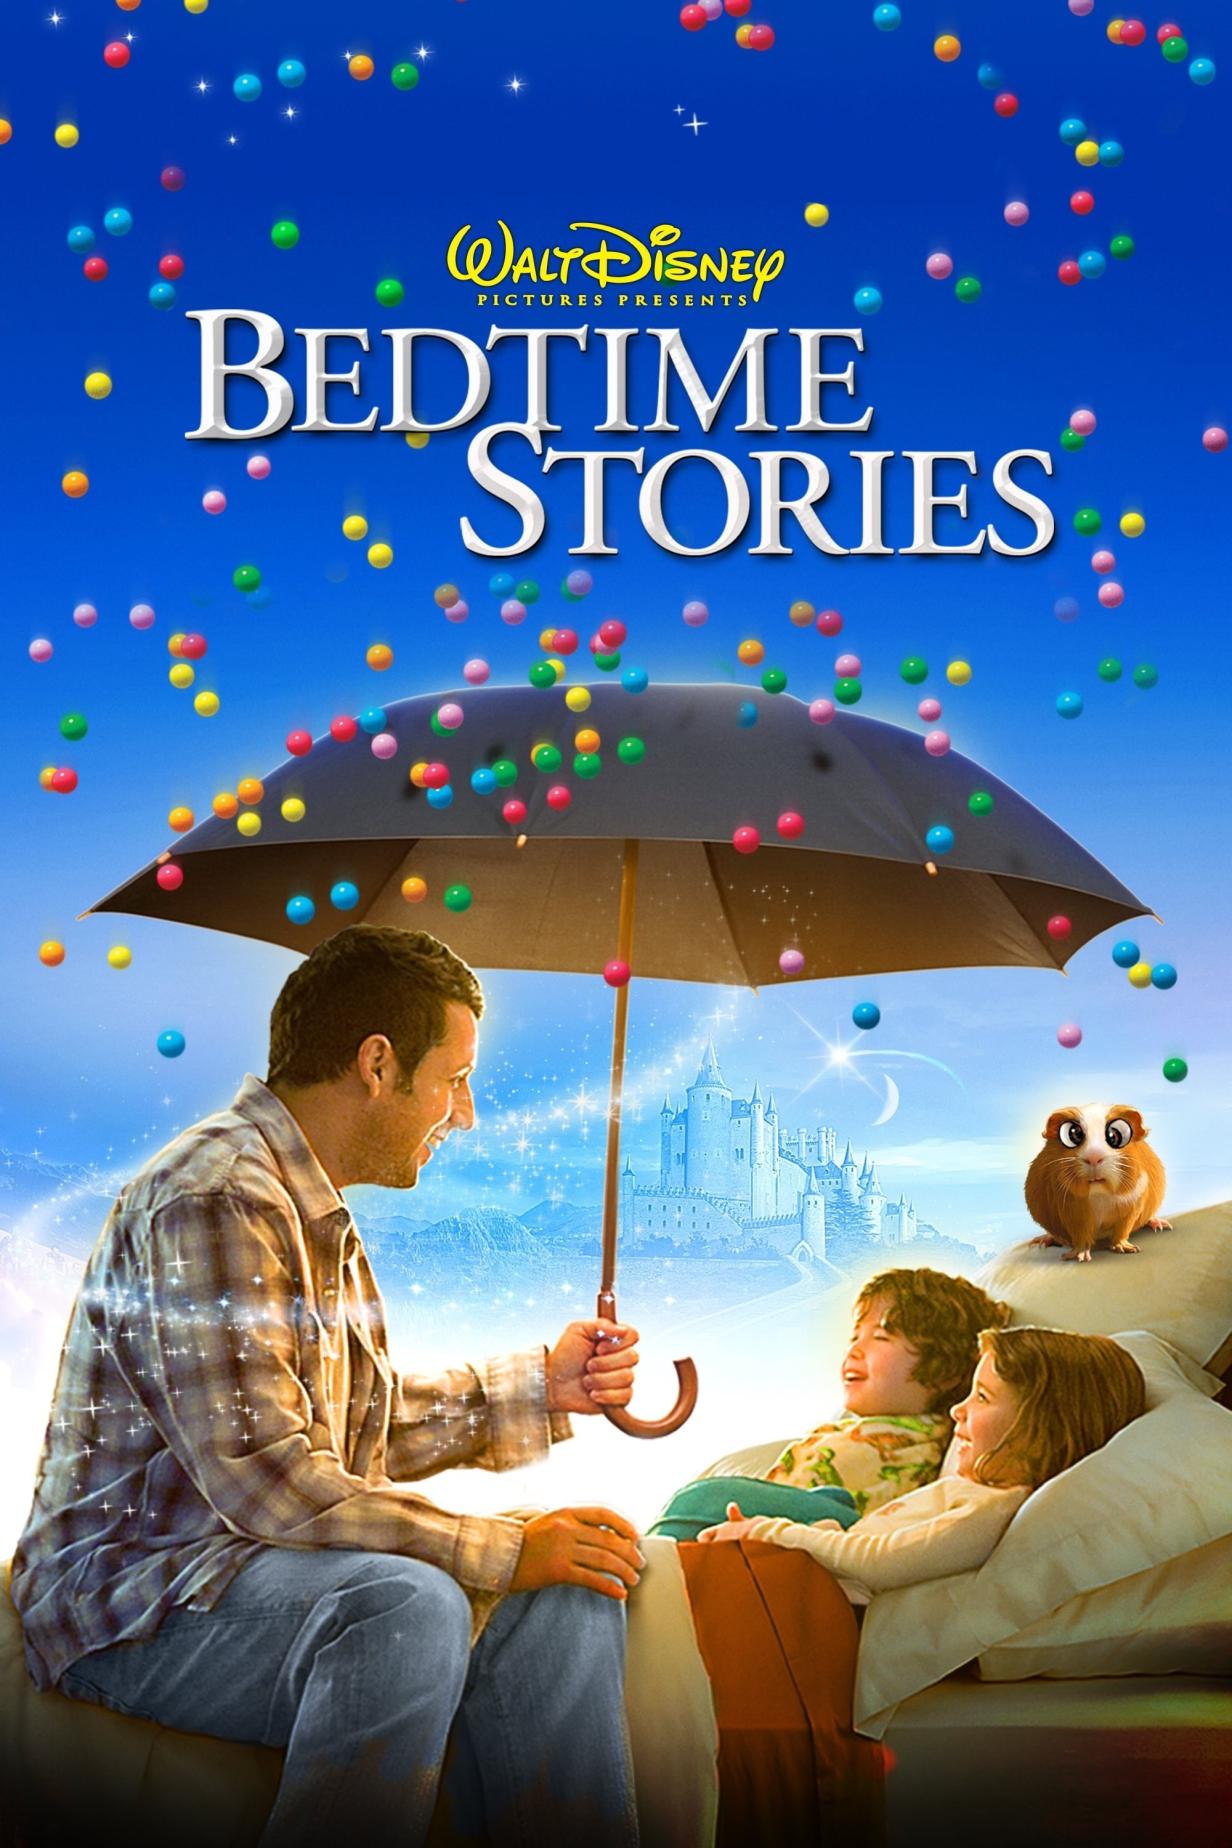 Bedtime Stories film.at